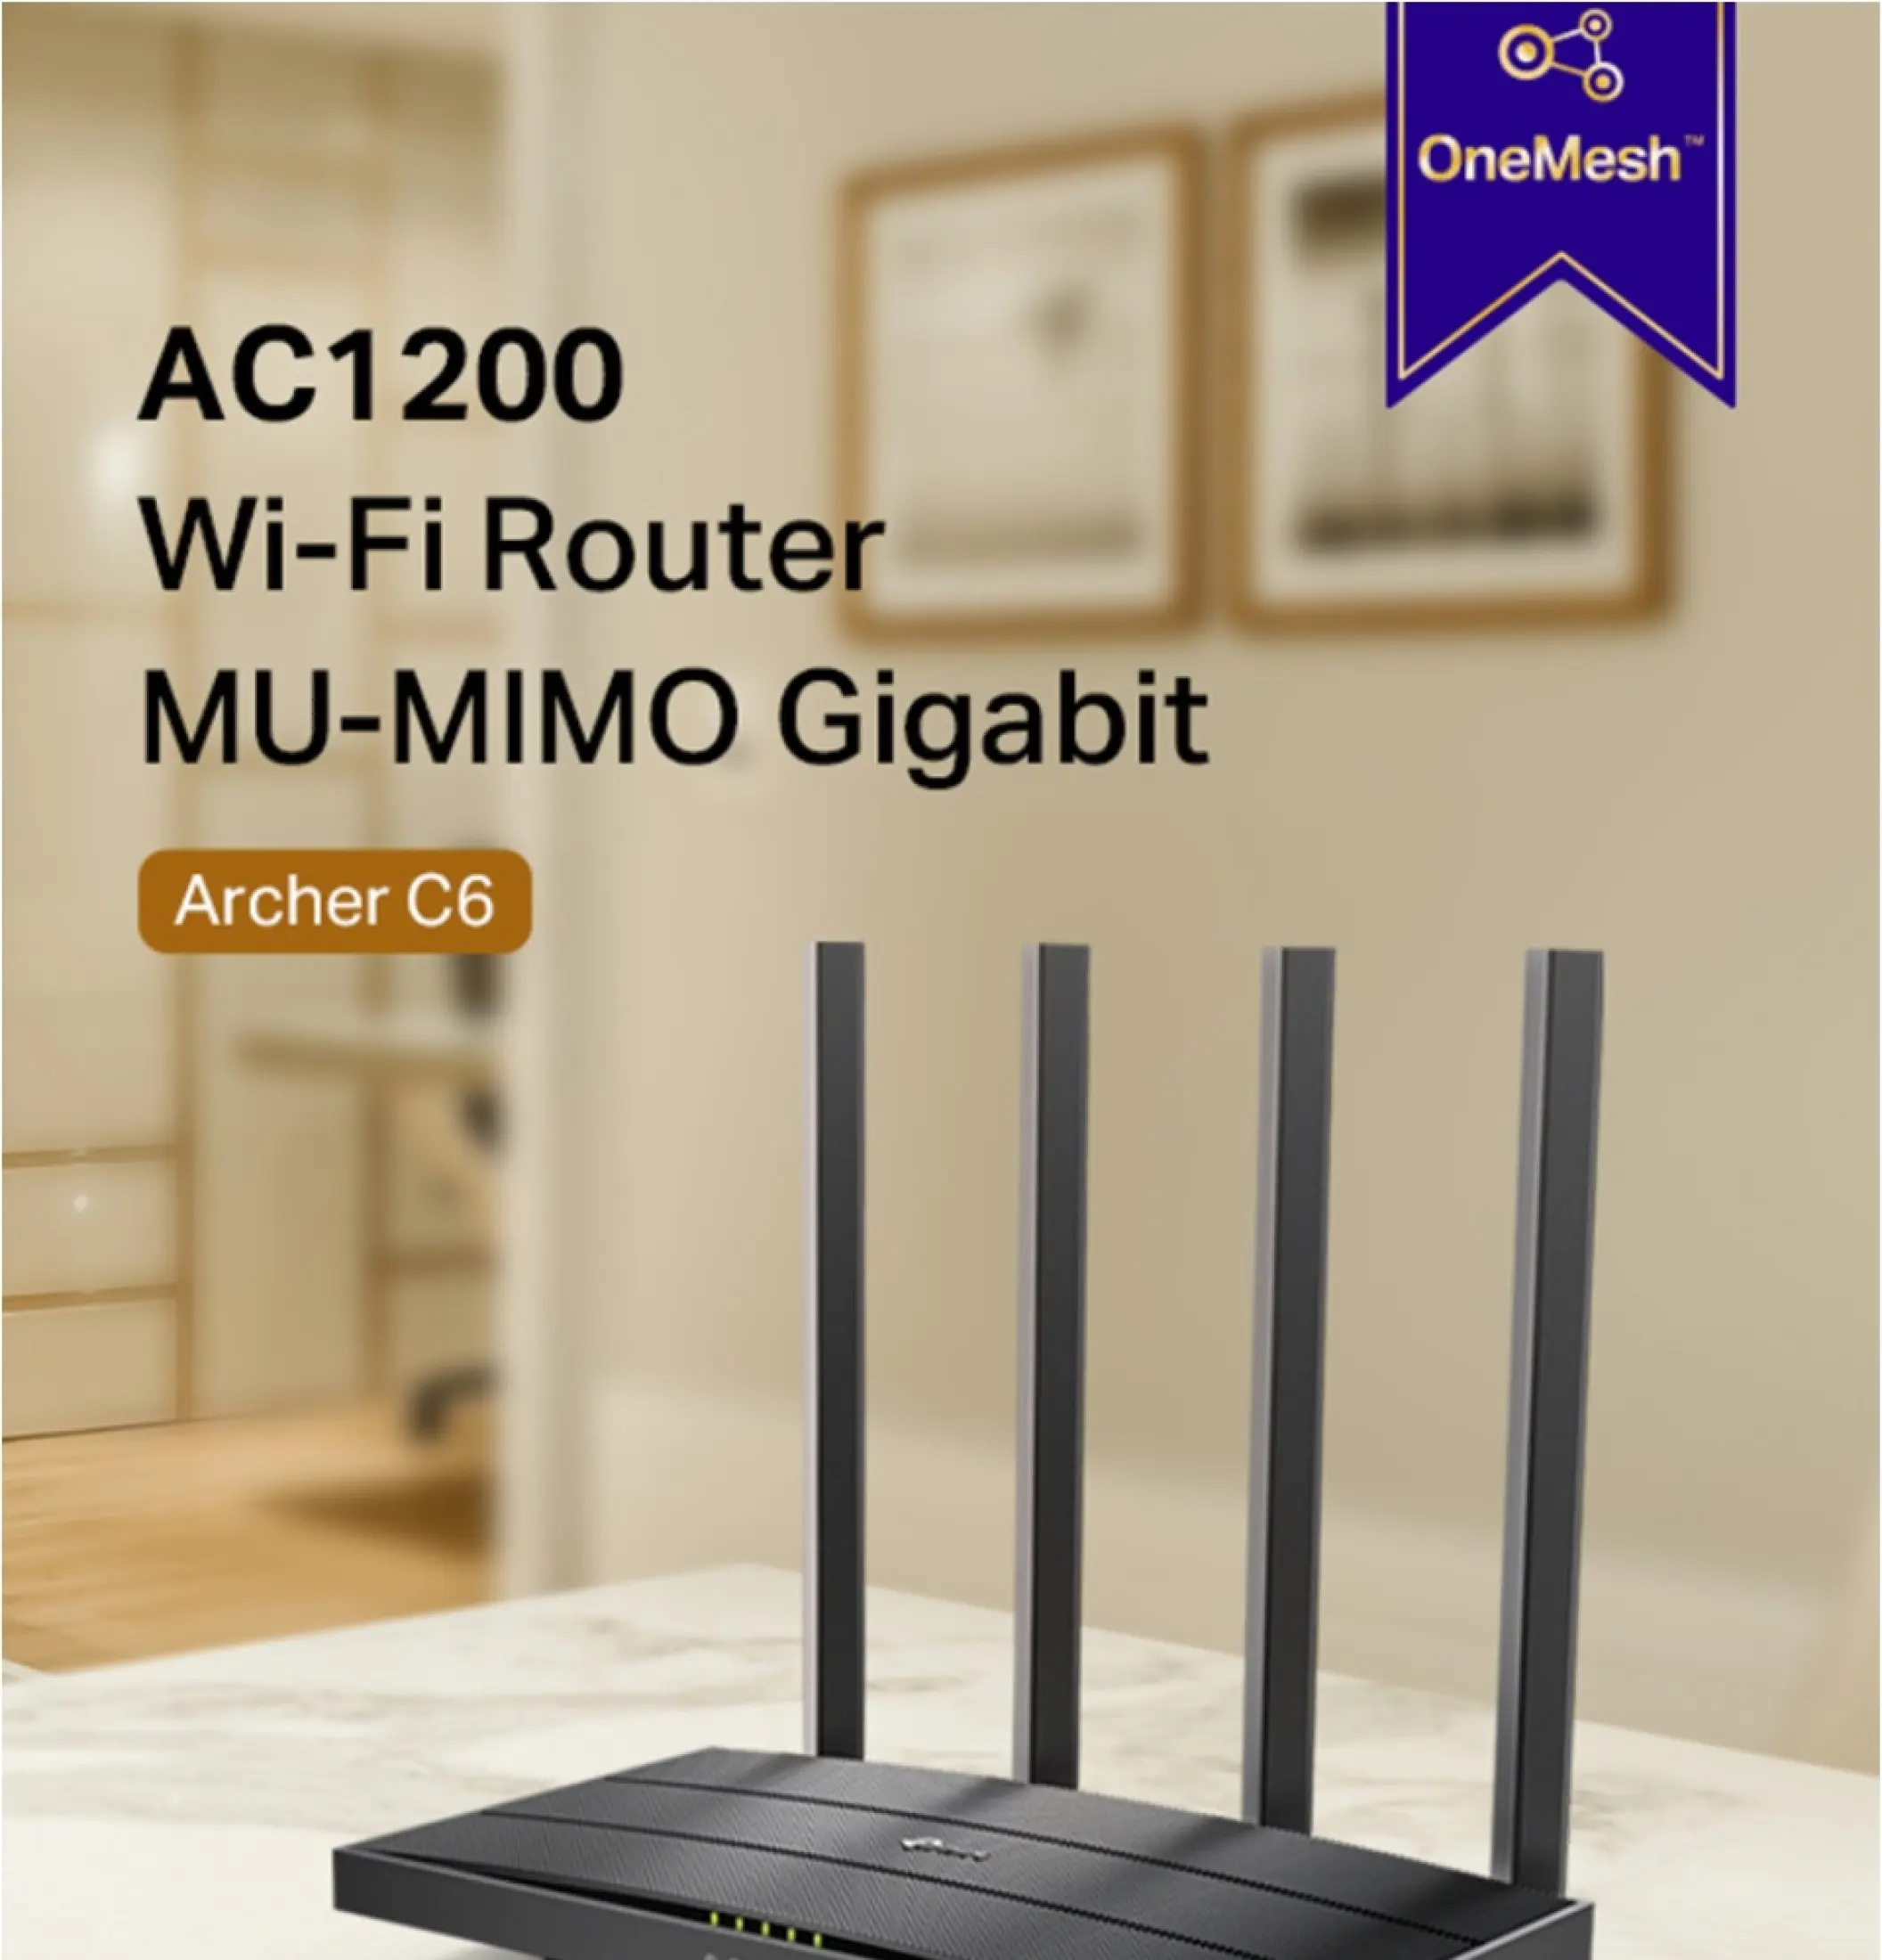 TP-Link Archer C6 AC1200 Wireless MU-MIMO Gigabit Router 2.4GHz & 5GHz Dual Band AC WiFi Gigabit Port Router TP LINK TPLINK | Lazada PH